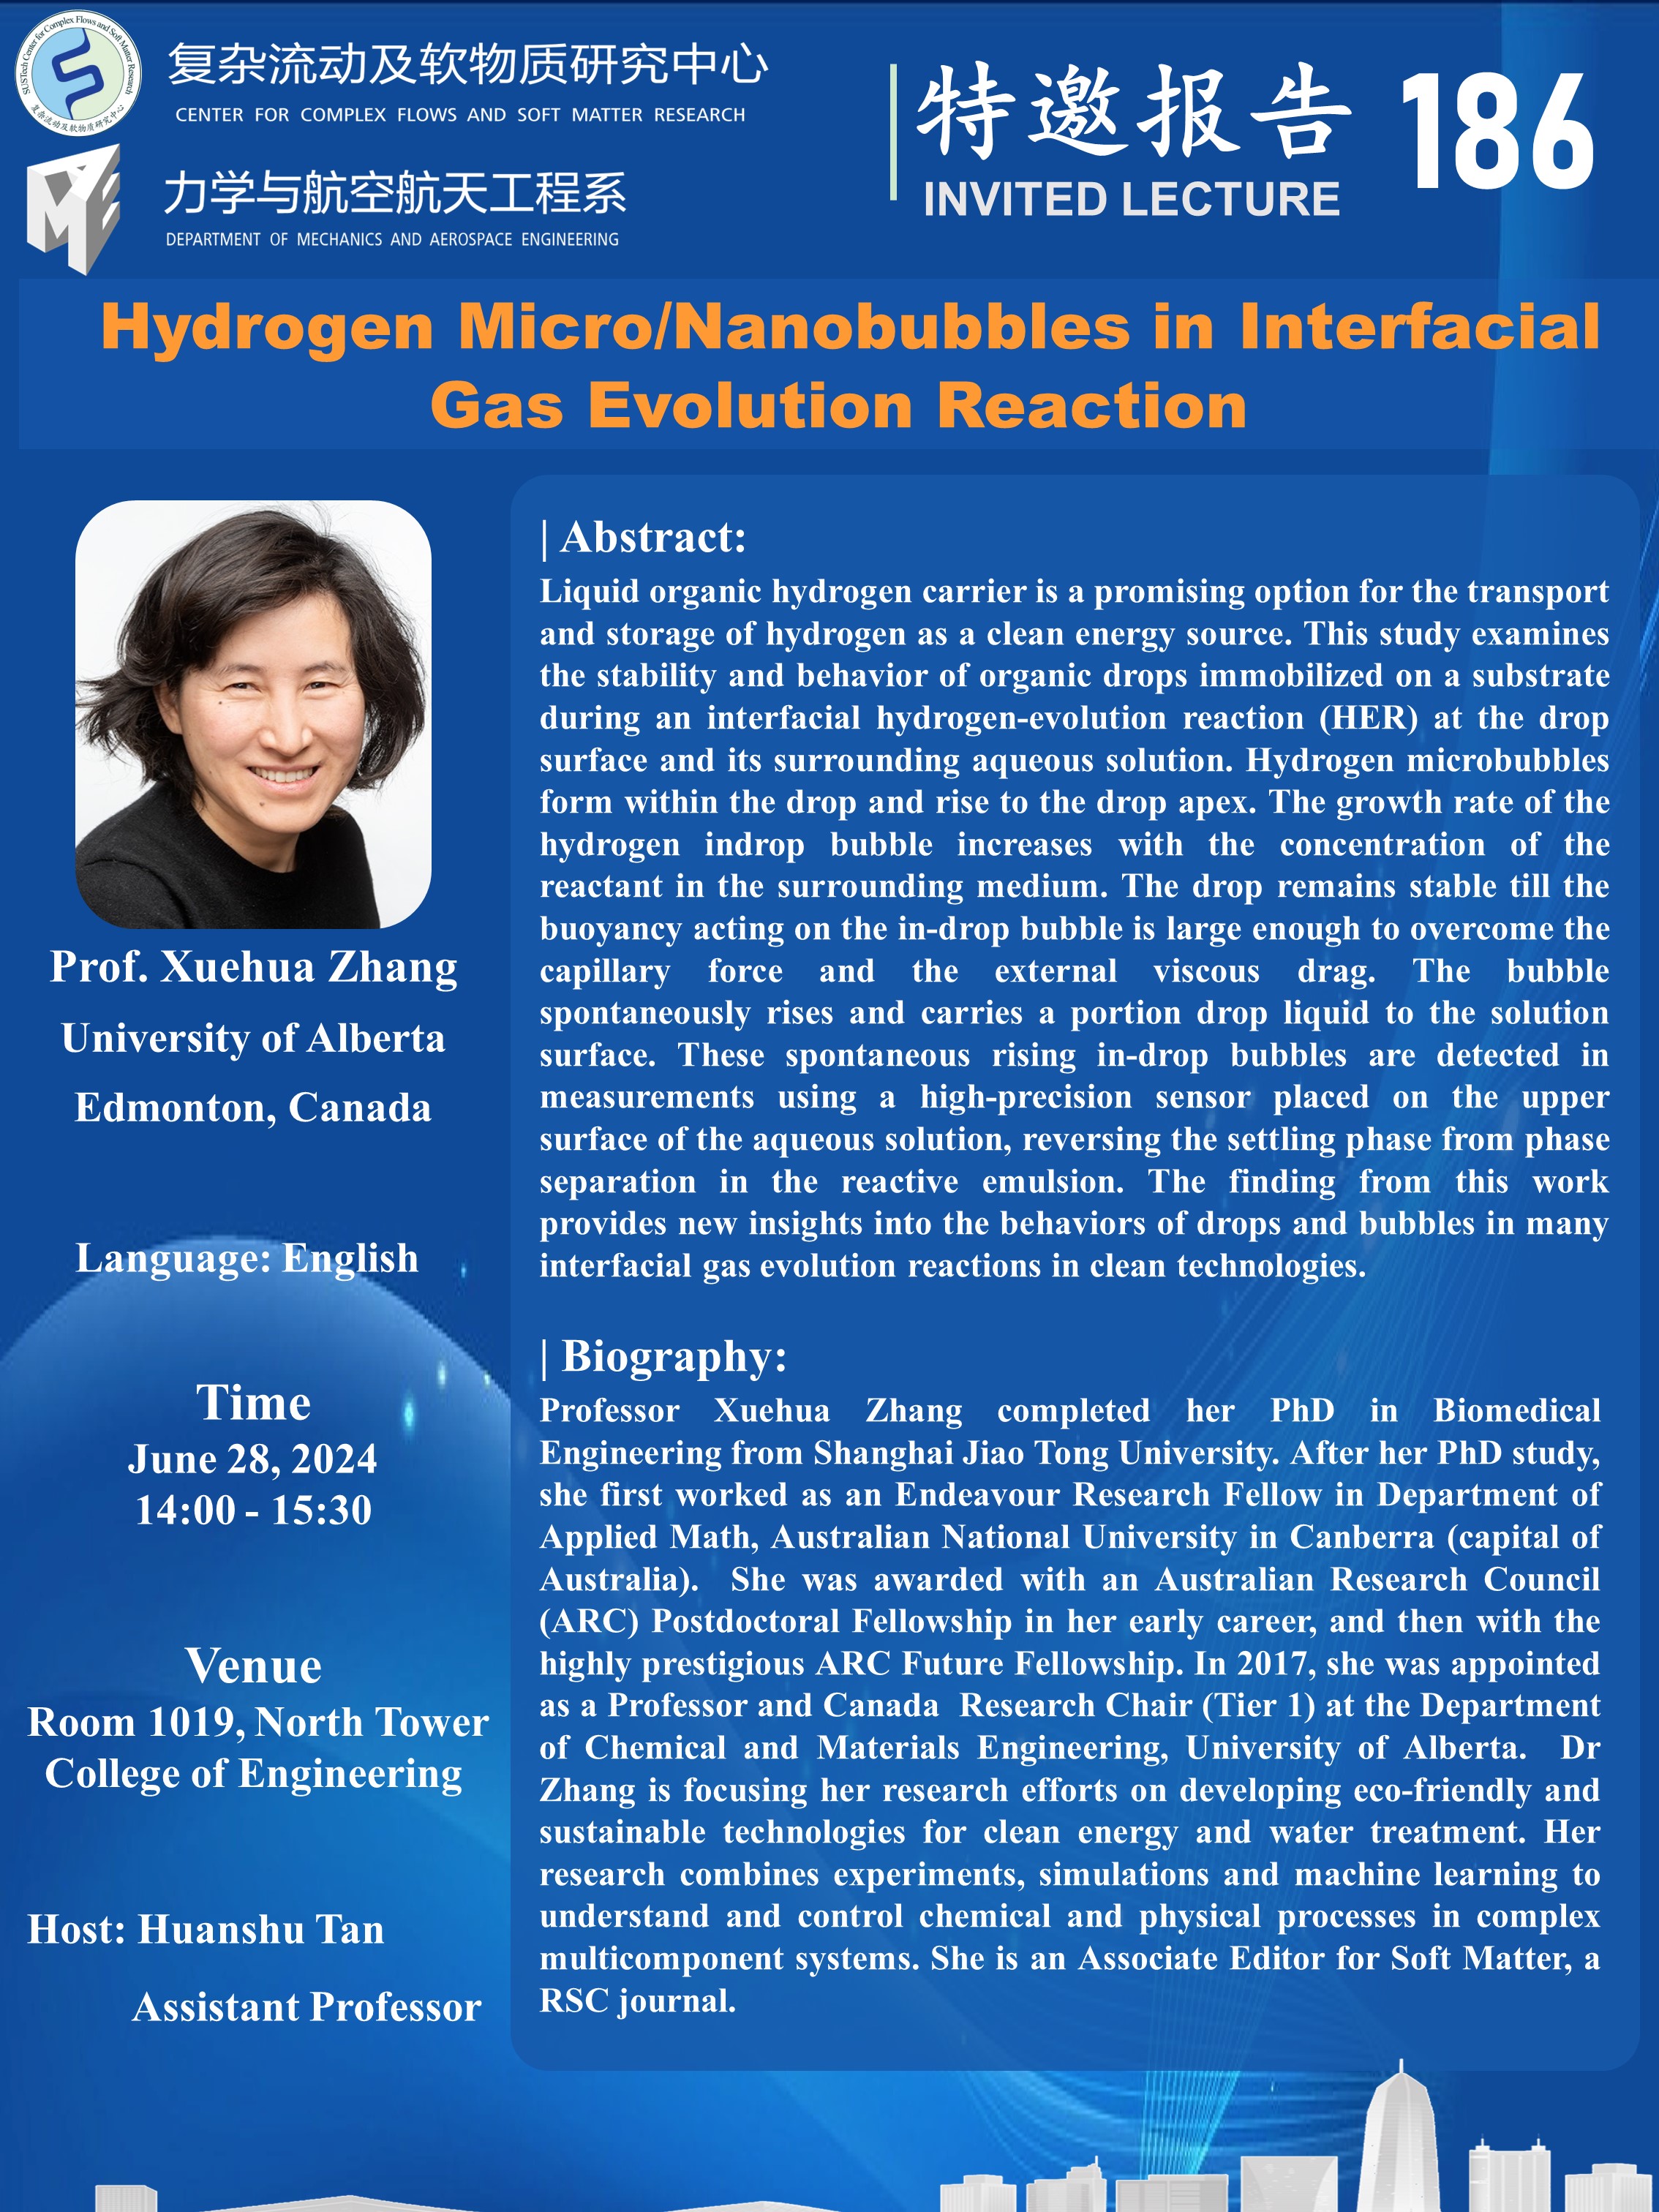 Hydrogen Micro/Nanobubbles in Interfacial Gas Evolution Reaction